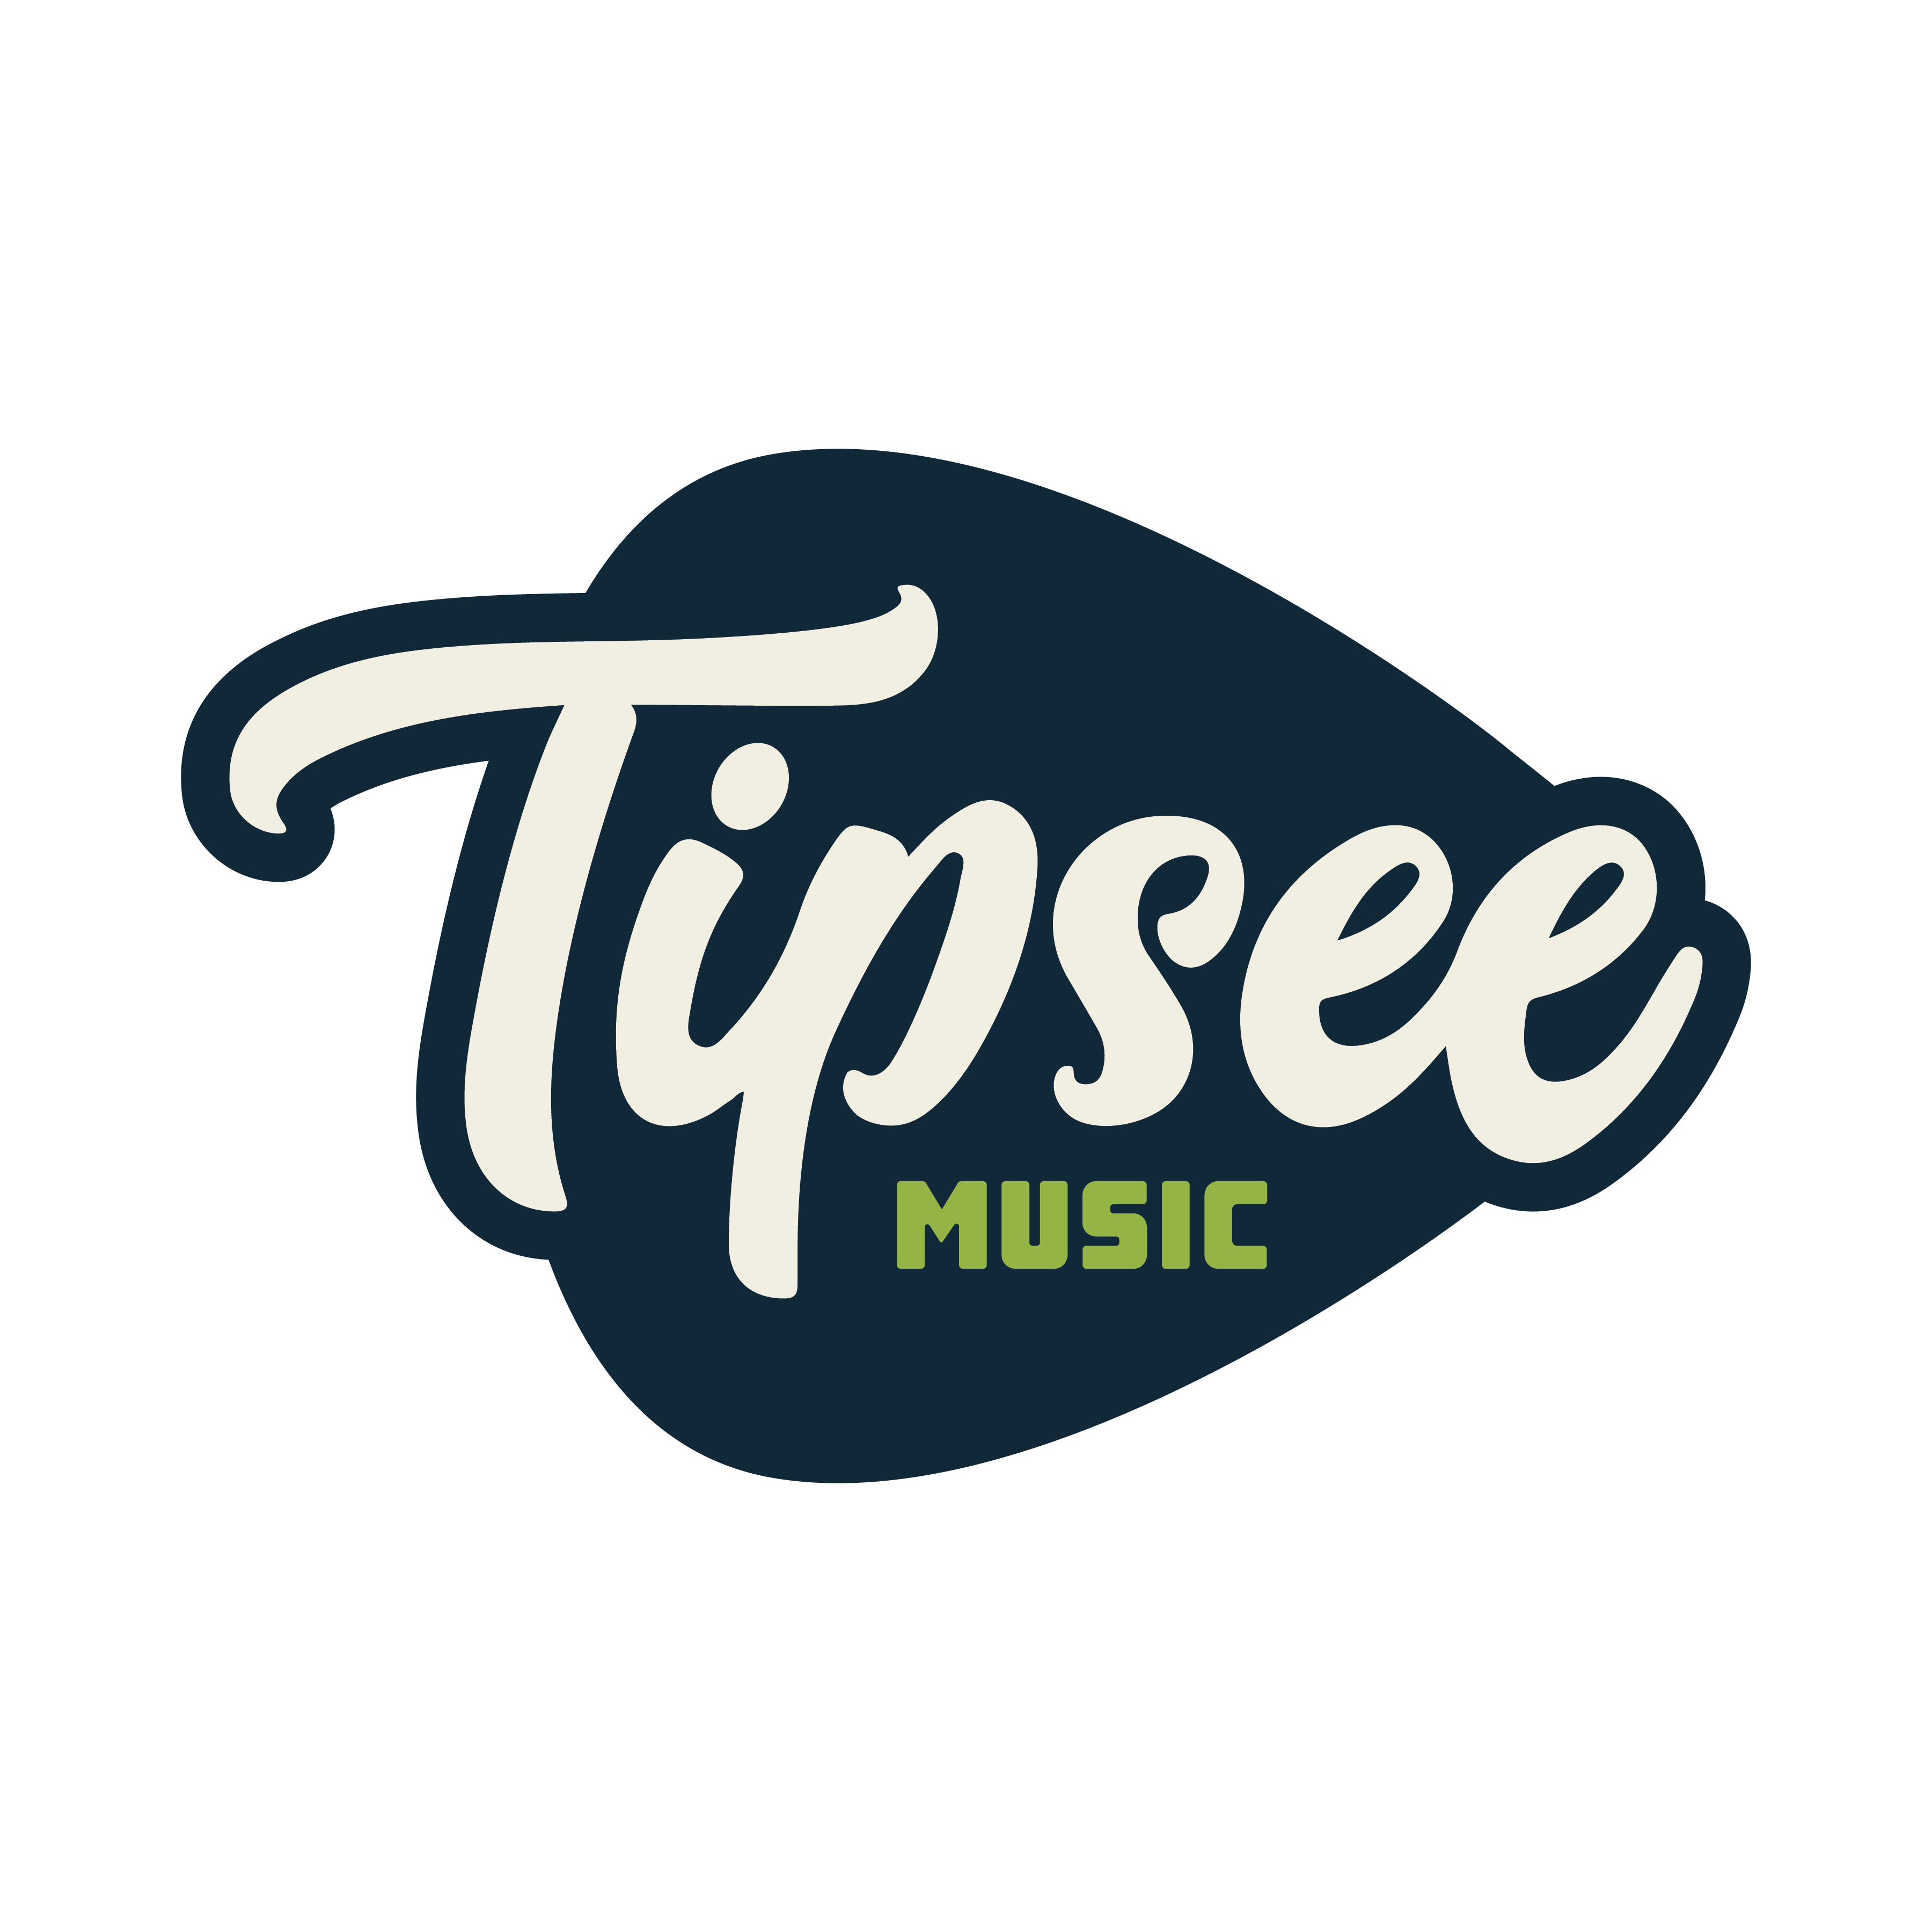 tipsee music logo